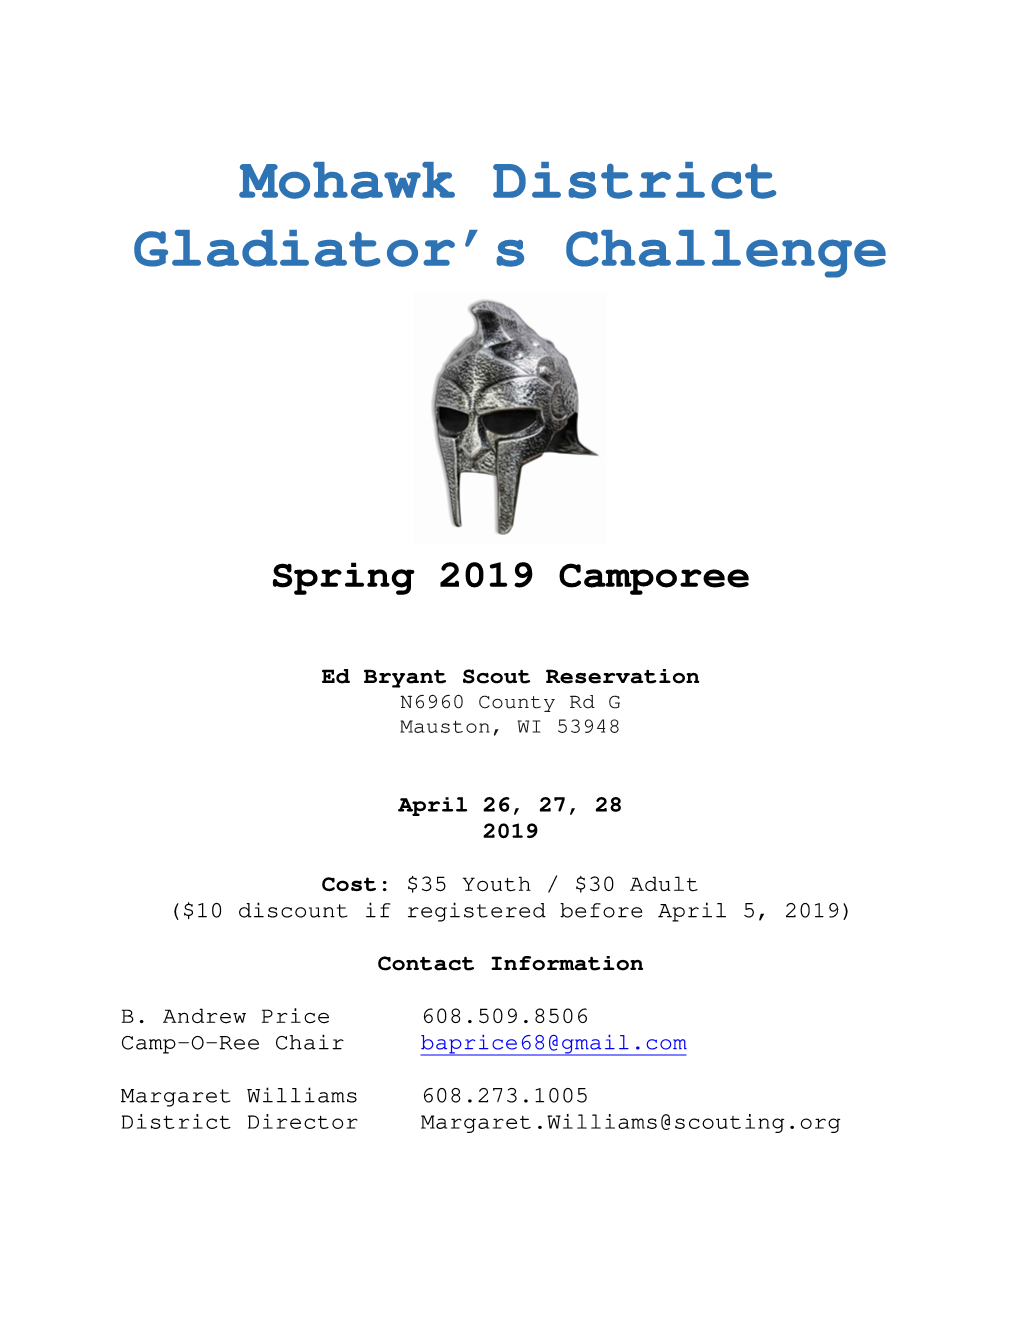 Mohawk District Gladiator's Challenge